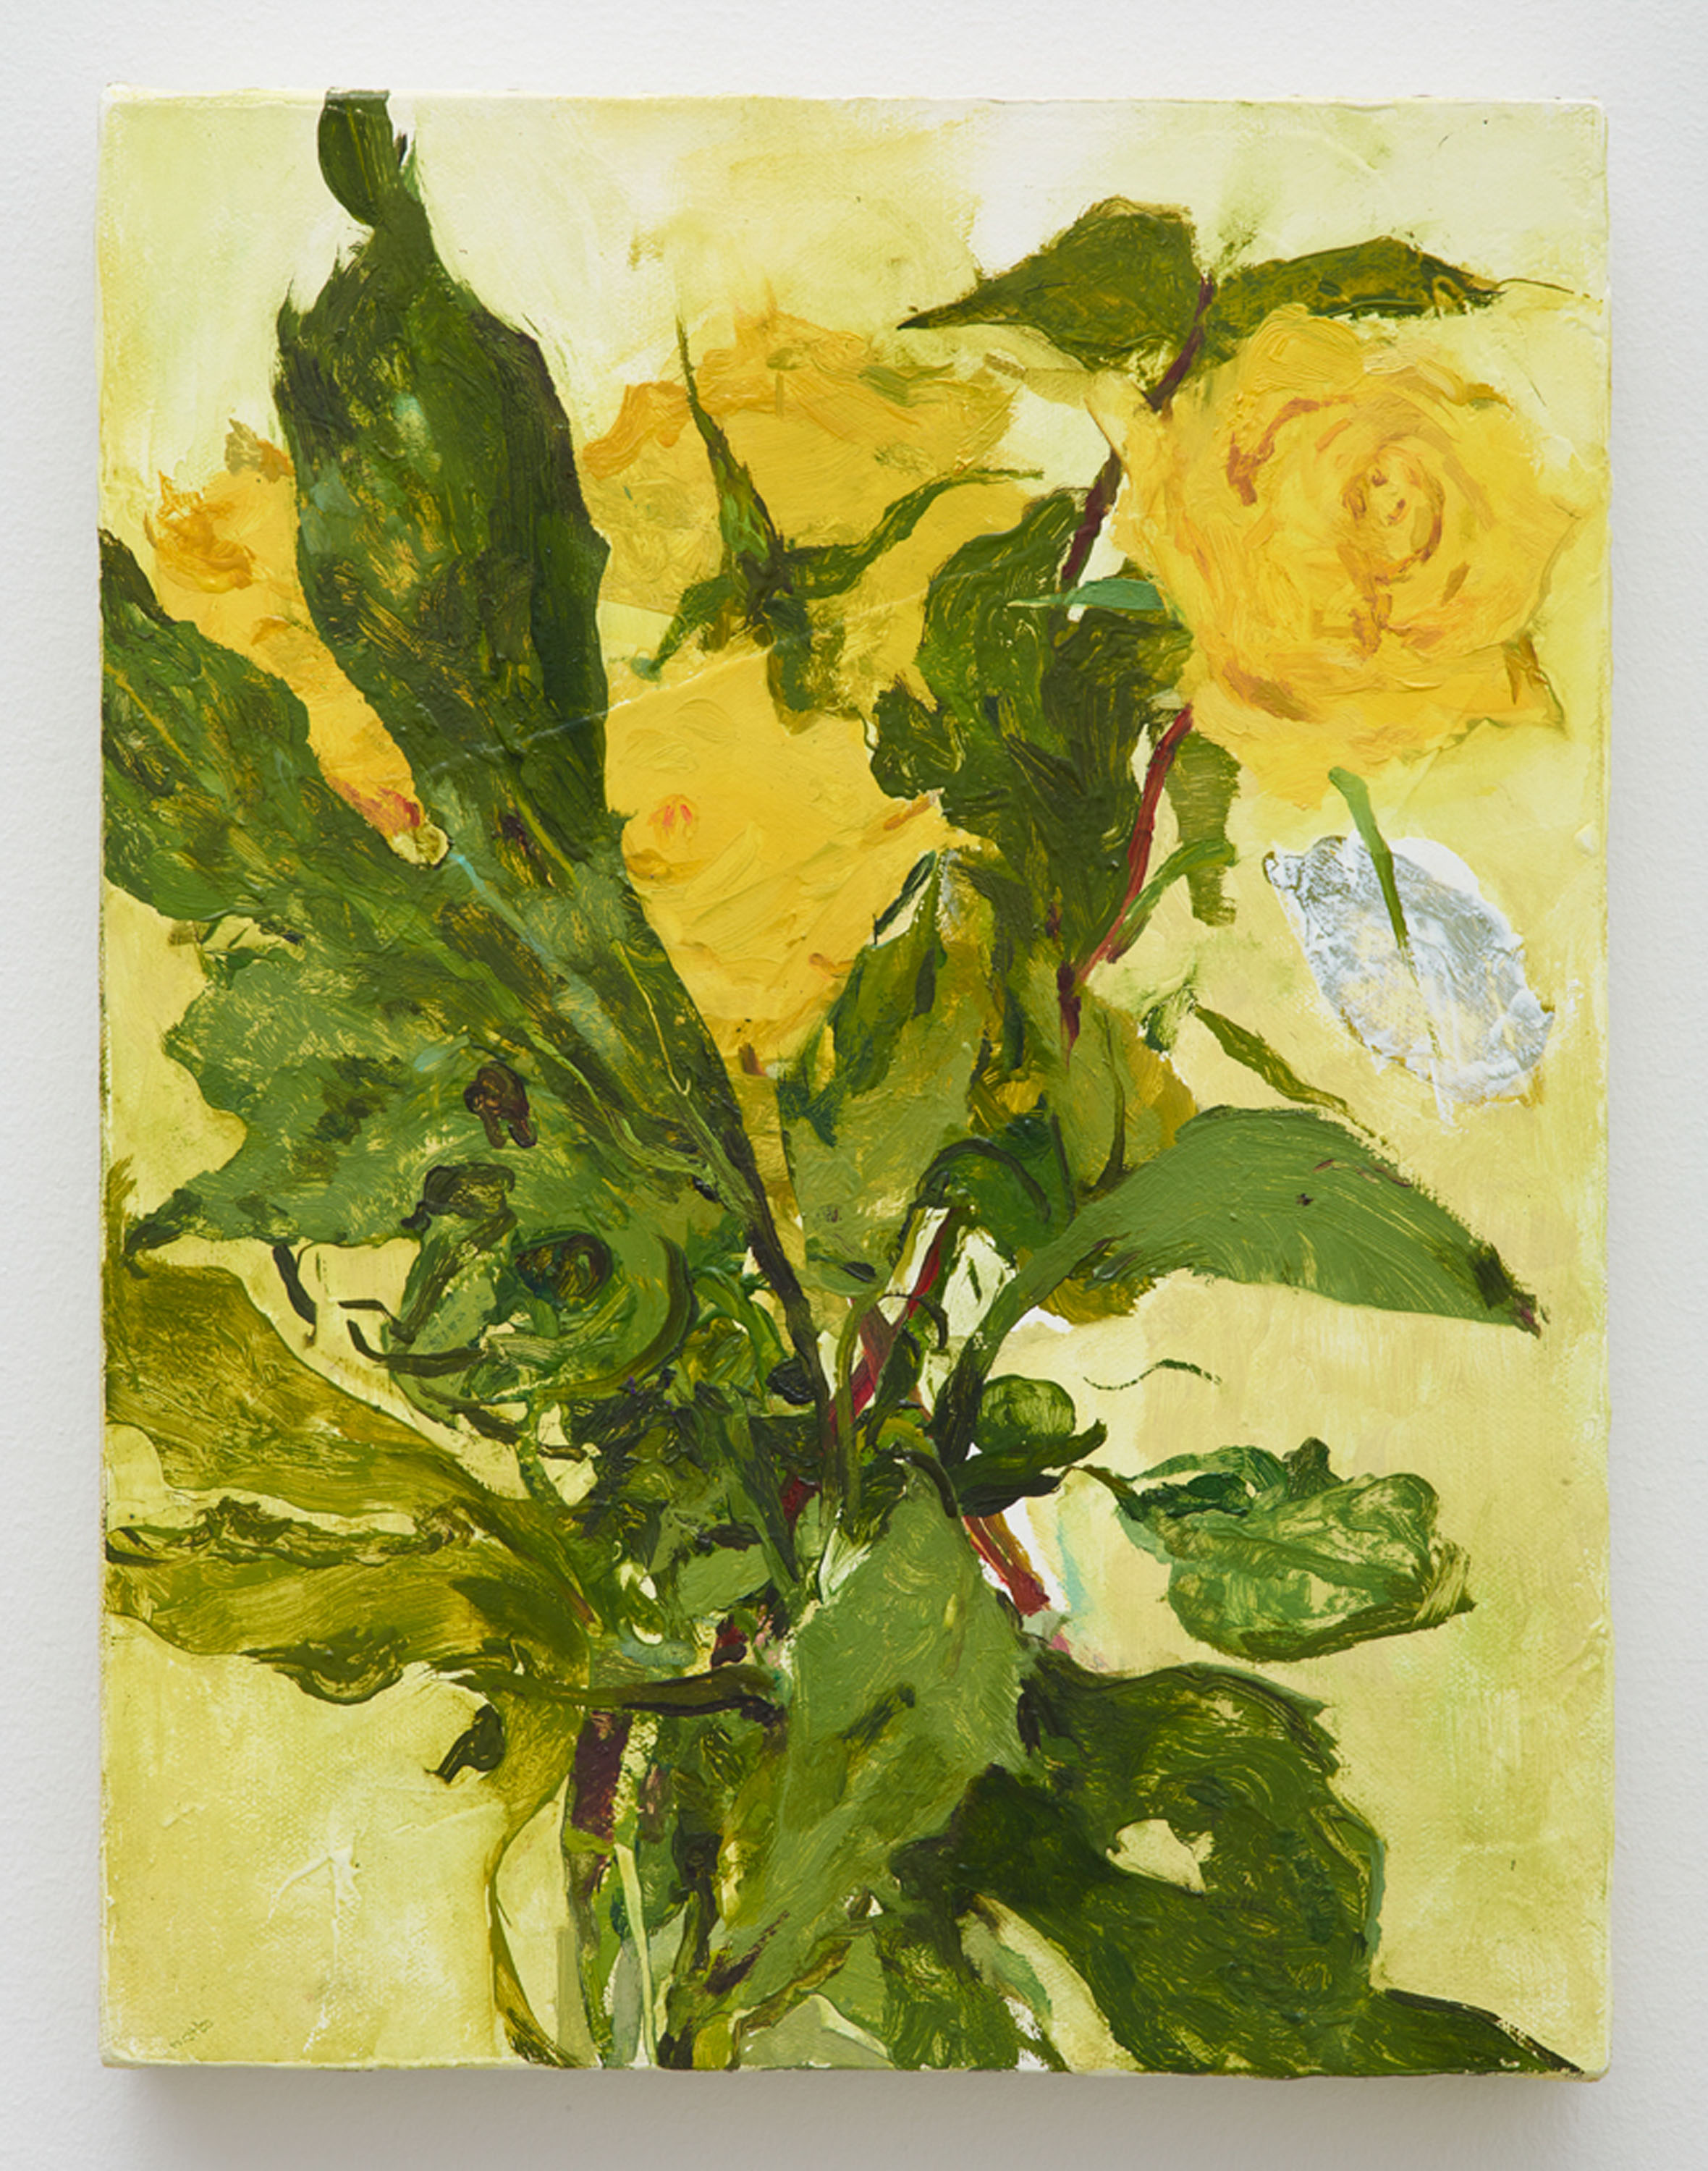 Yellow Roses, 2014-15